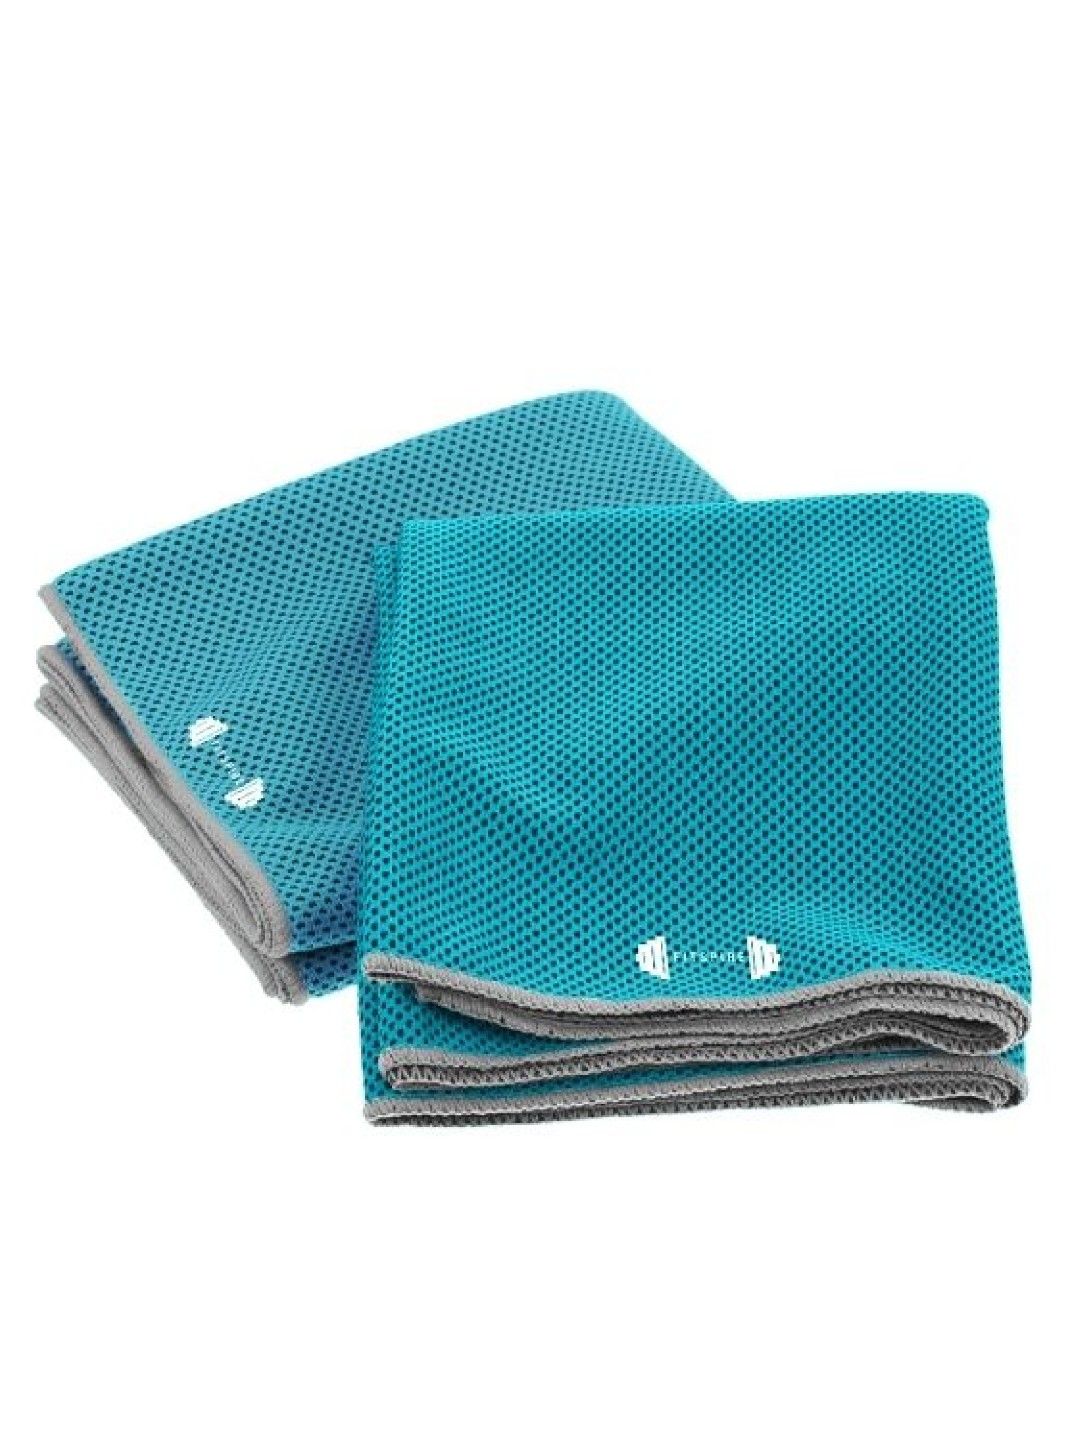 Sunbeams Lifestyle Fitspire Microfiber Cooling Towel PVA/Fabric (Set of 2)